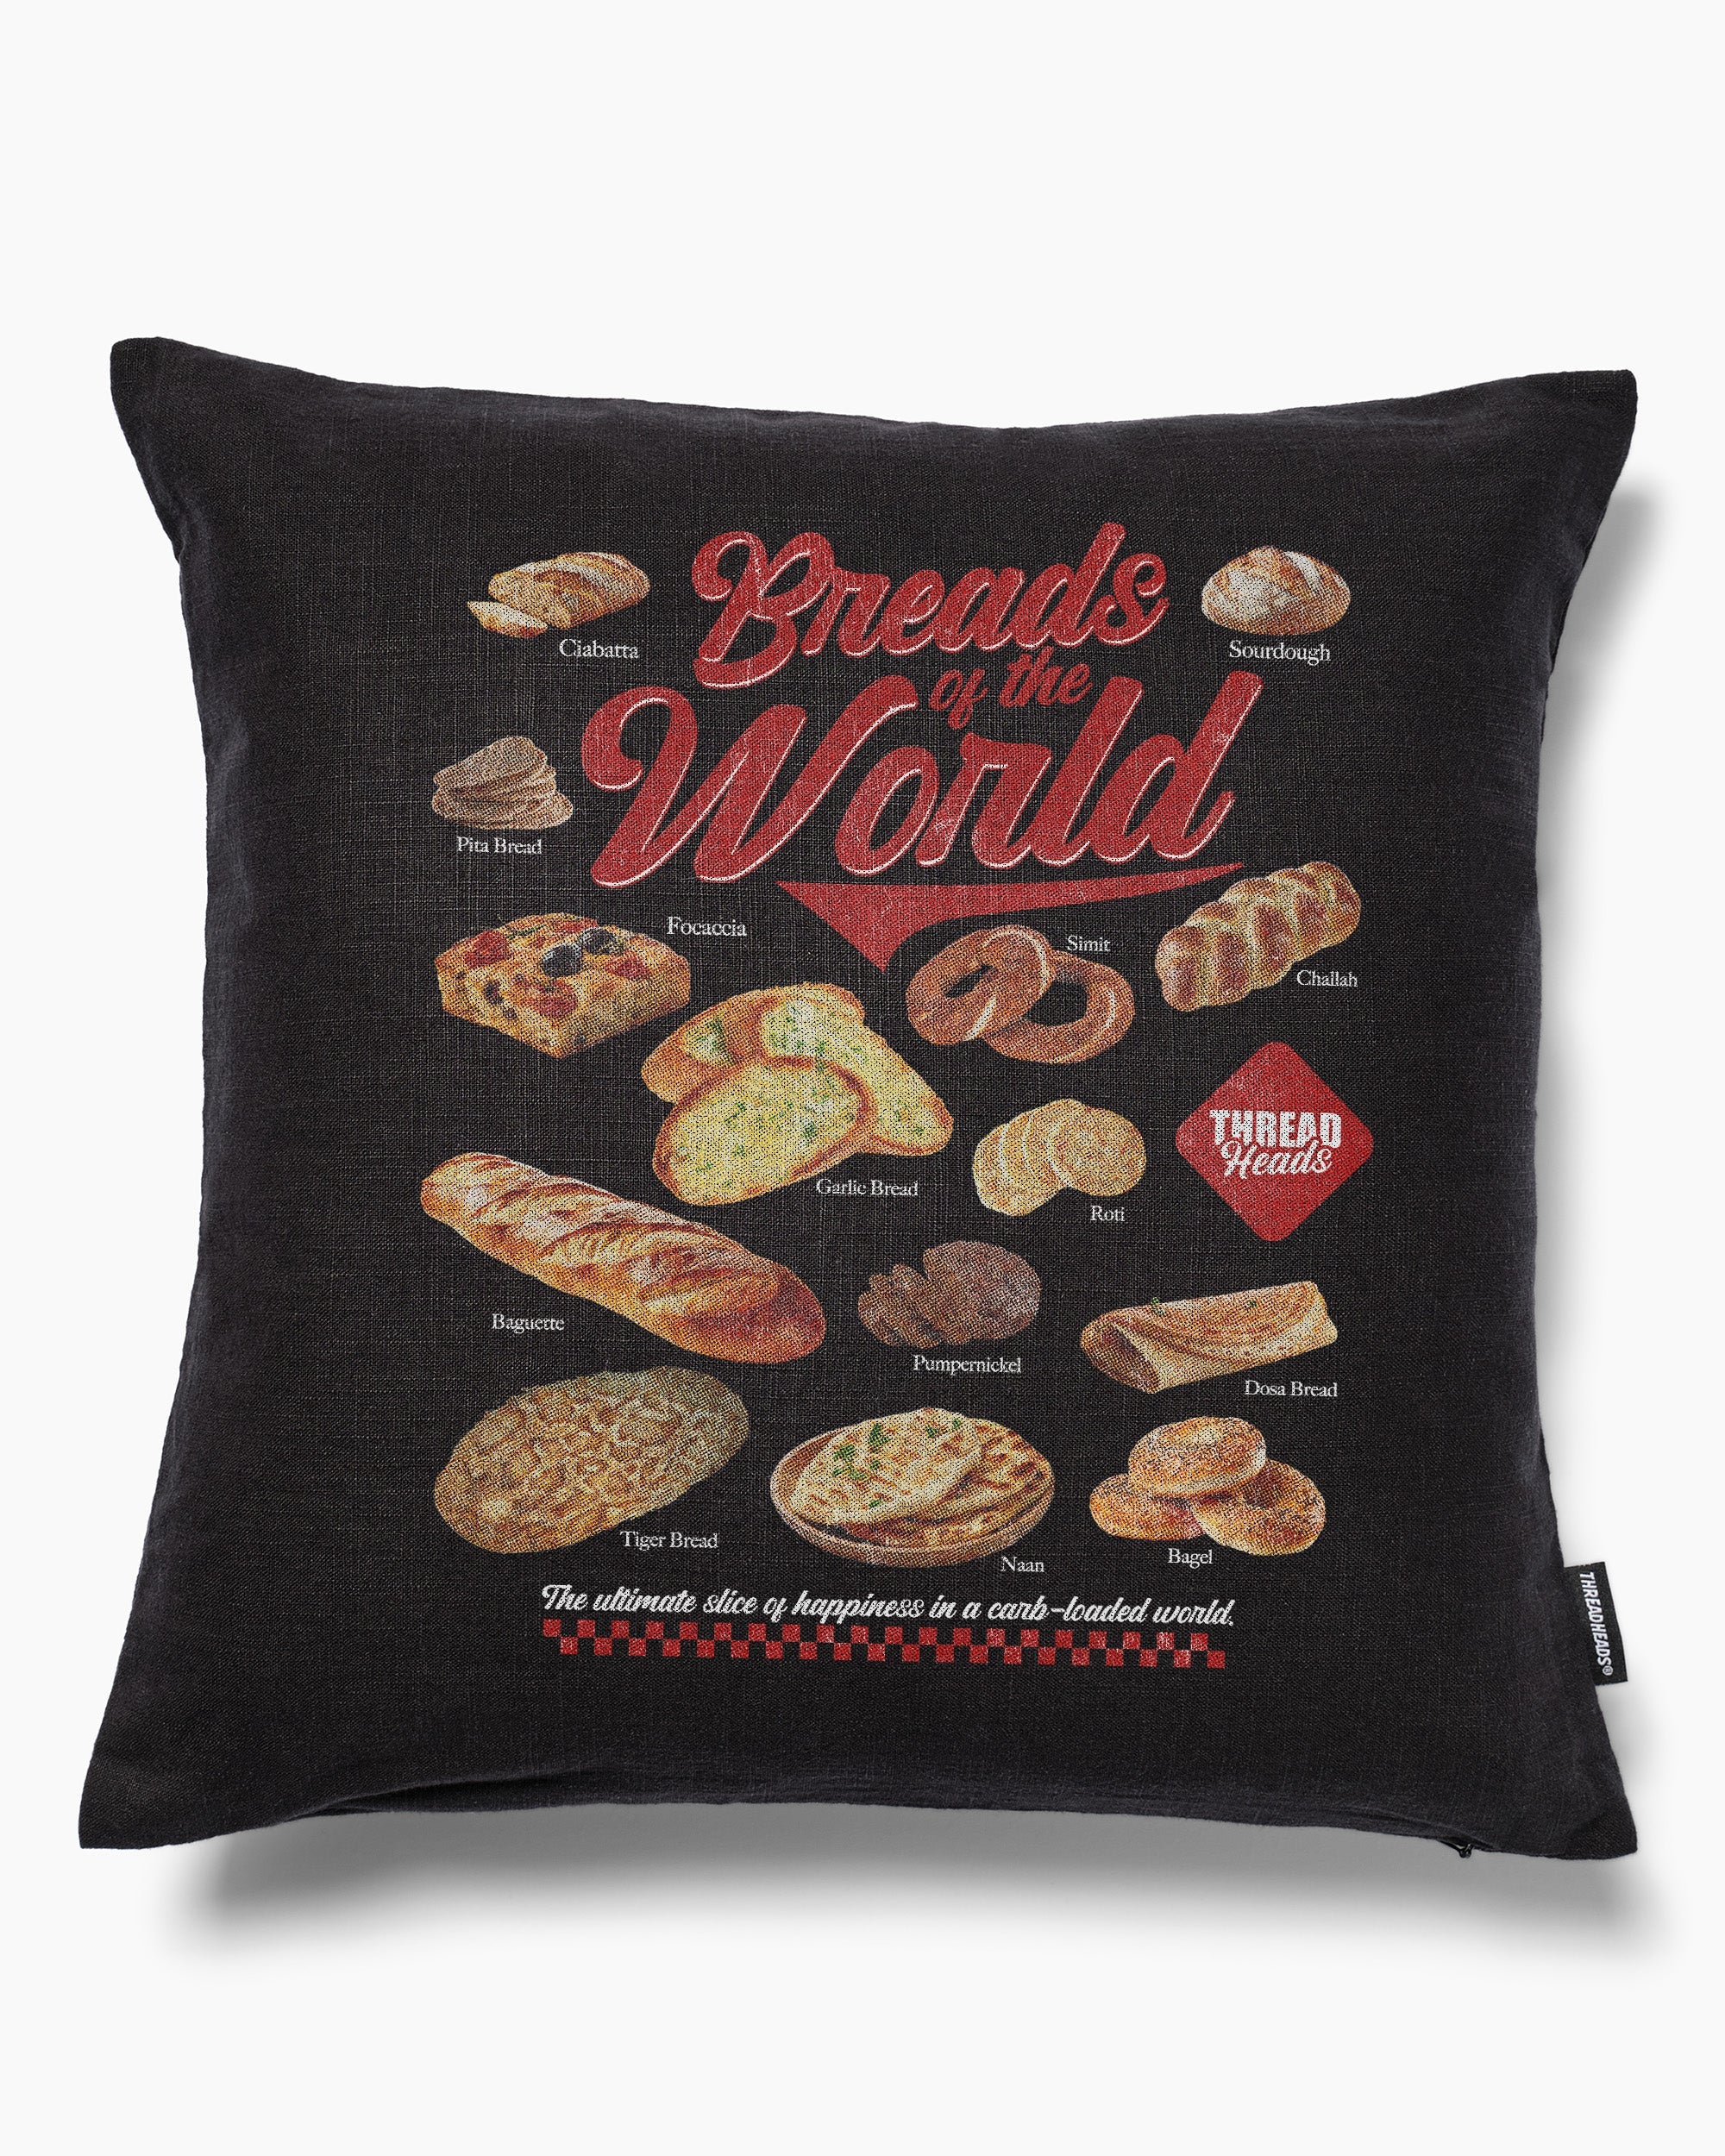 Breads of the World Cushion Australia Online Black